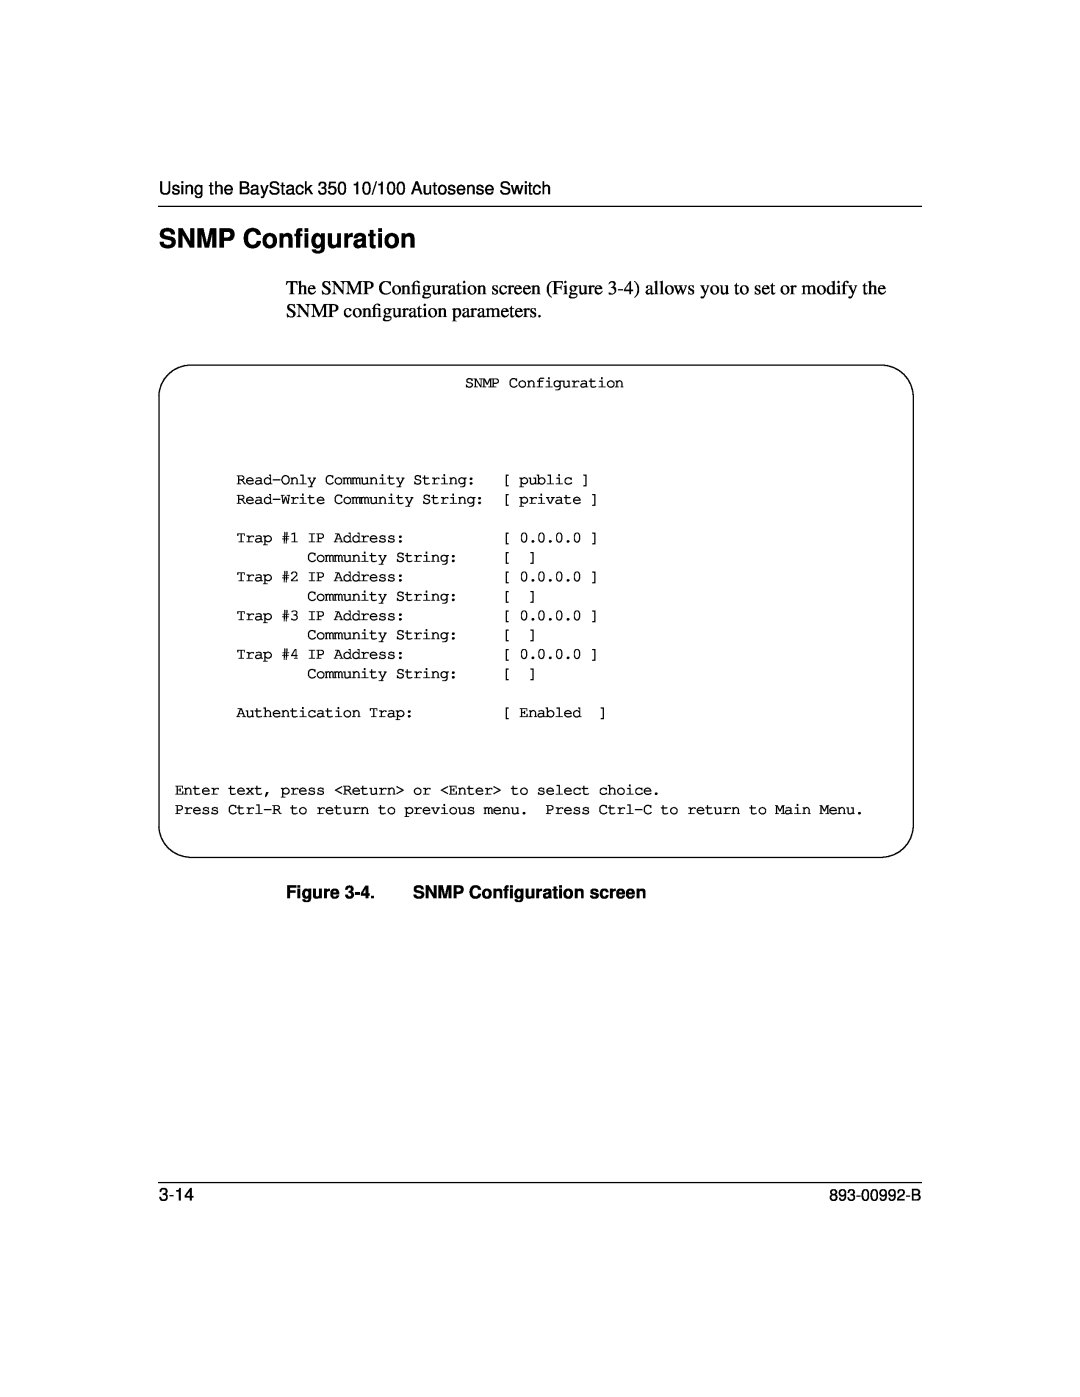 Bay Technical Associates manual Using the BayStack 350 10/100 Autosense Switch, 4. SNMP Conﬁguration screen, 3-14 